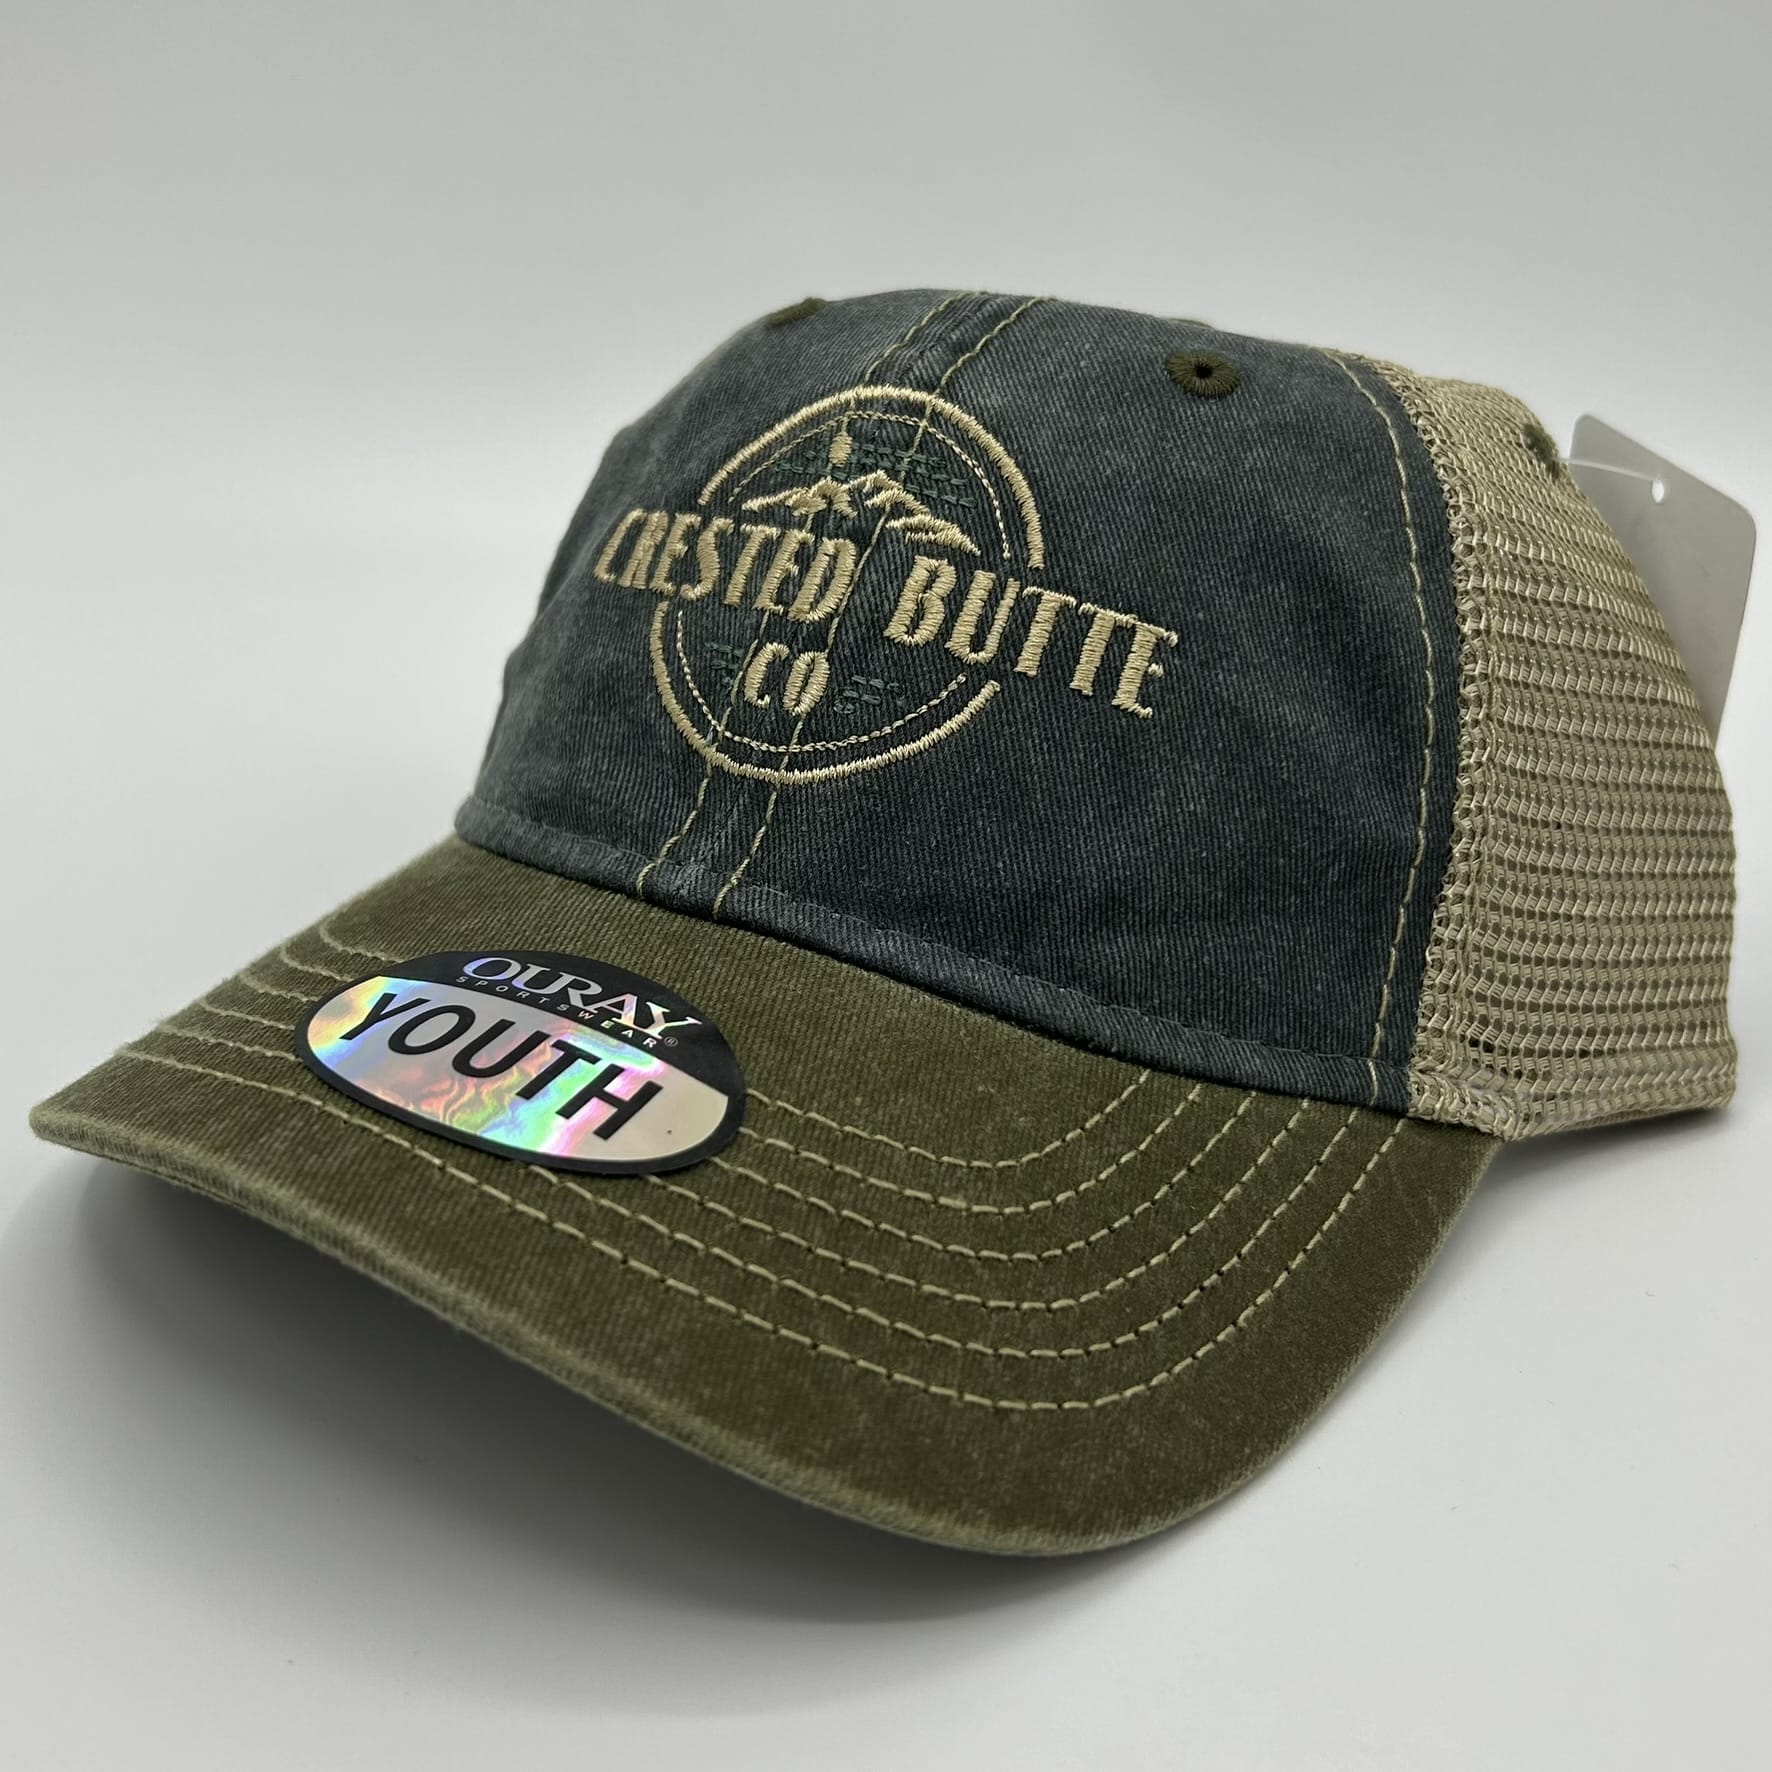 Crested Butte Youth Vintage Trucker Hat